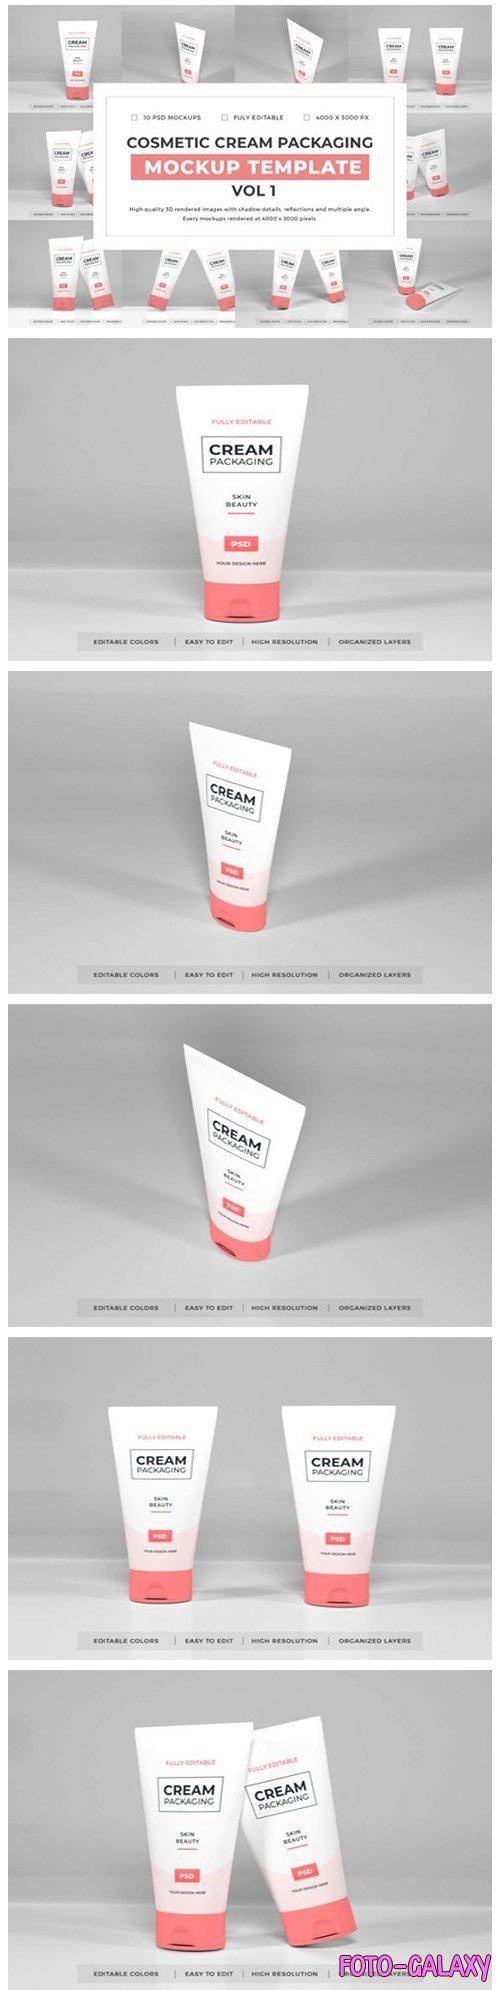 Cosmetic Cream Packaging Mockup Template Bundle Vol 1 - 1052568